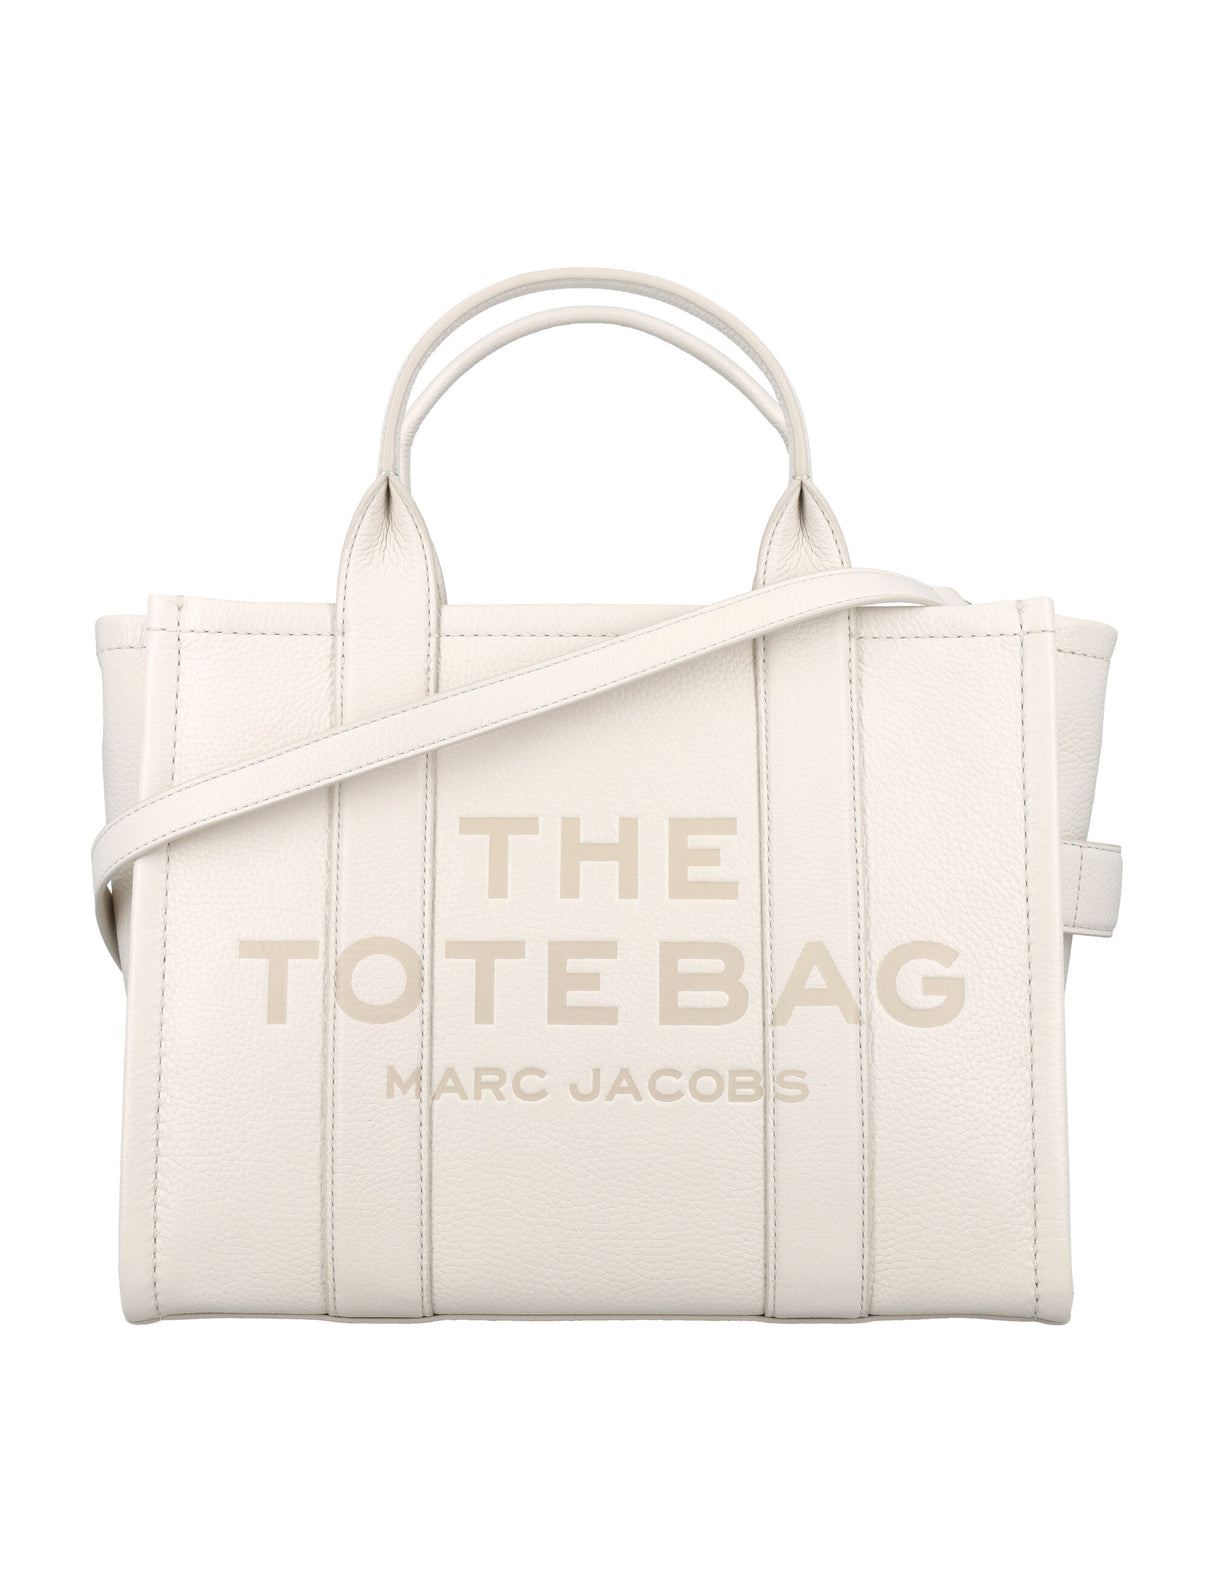 MARC JACOBS Silver Leather Medium Tote with Top Handles & Zip Closure - Women's Handbag